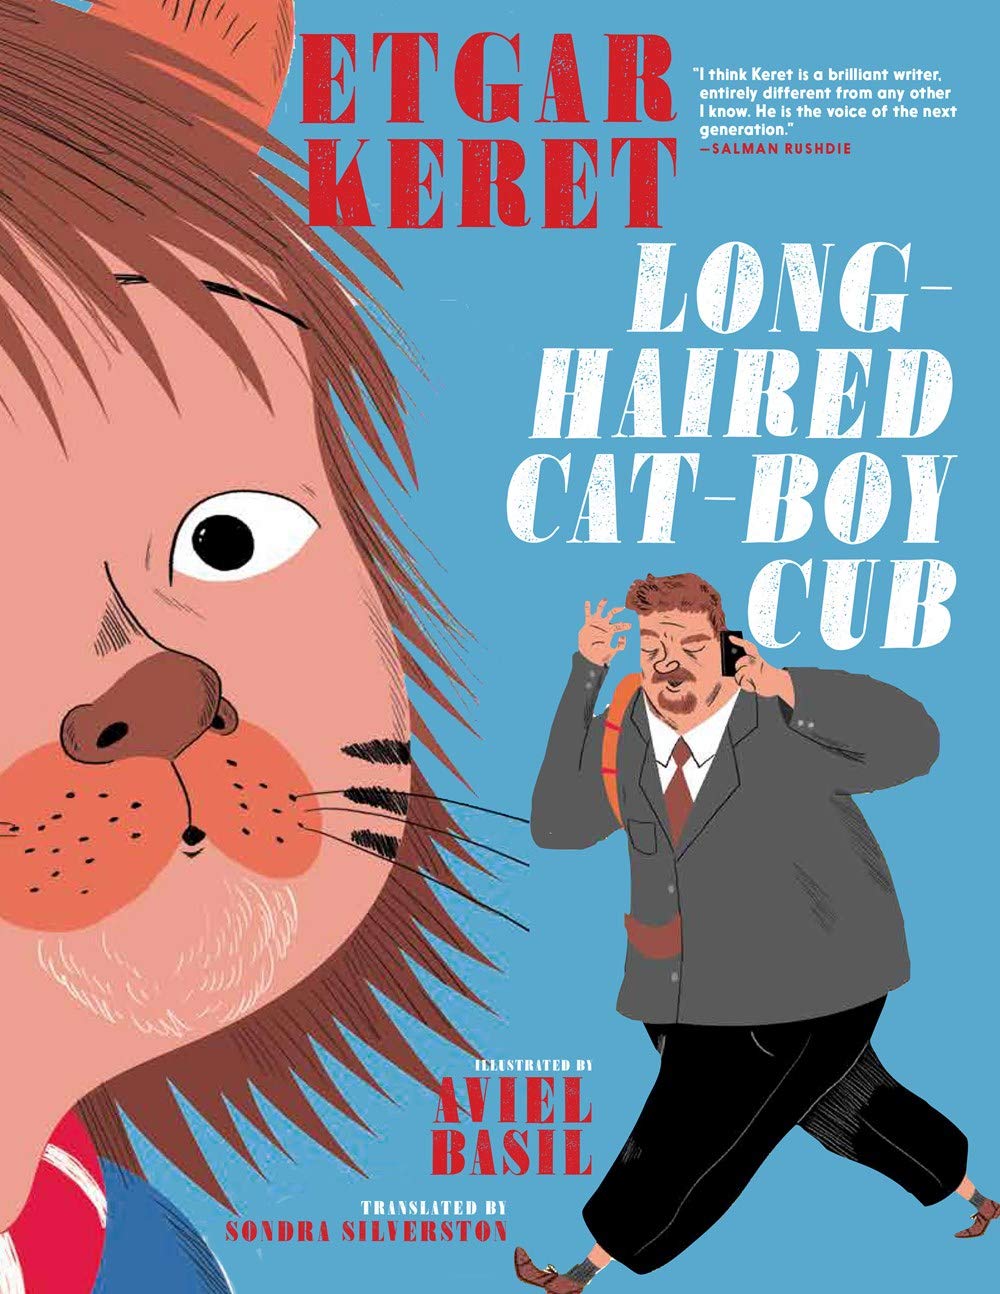 Long-haired Cat-boy Cub | Etgar Keret